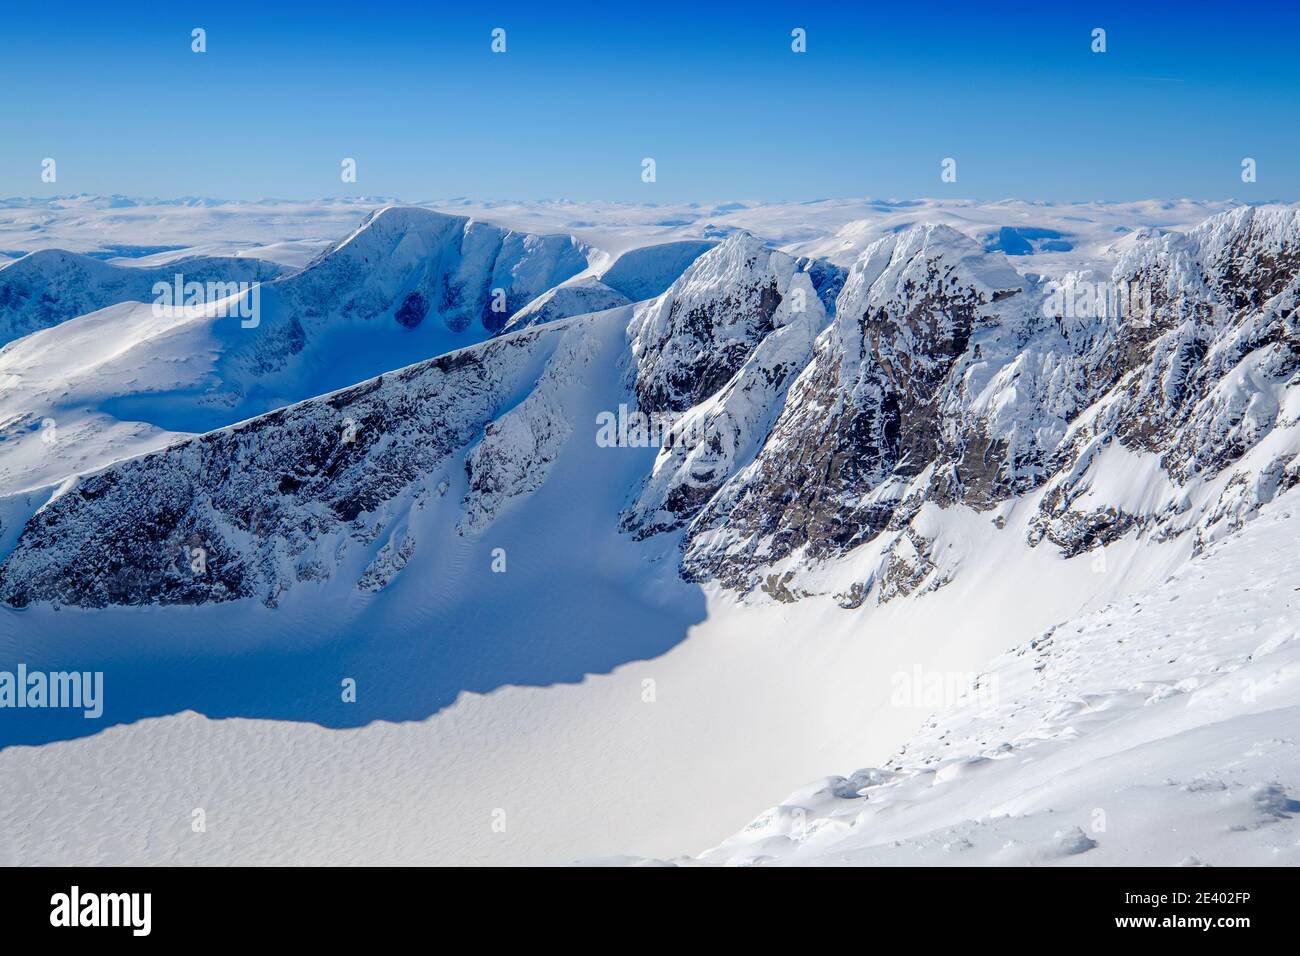 El grupo de montañas Snohetta en Dovre, Noruega Foto de stock